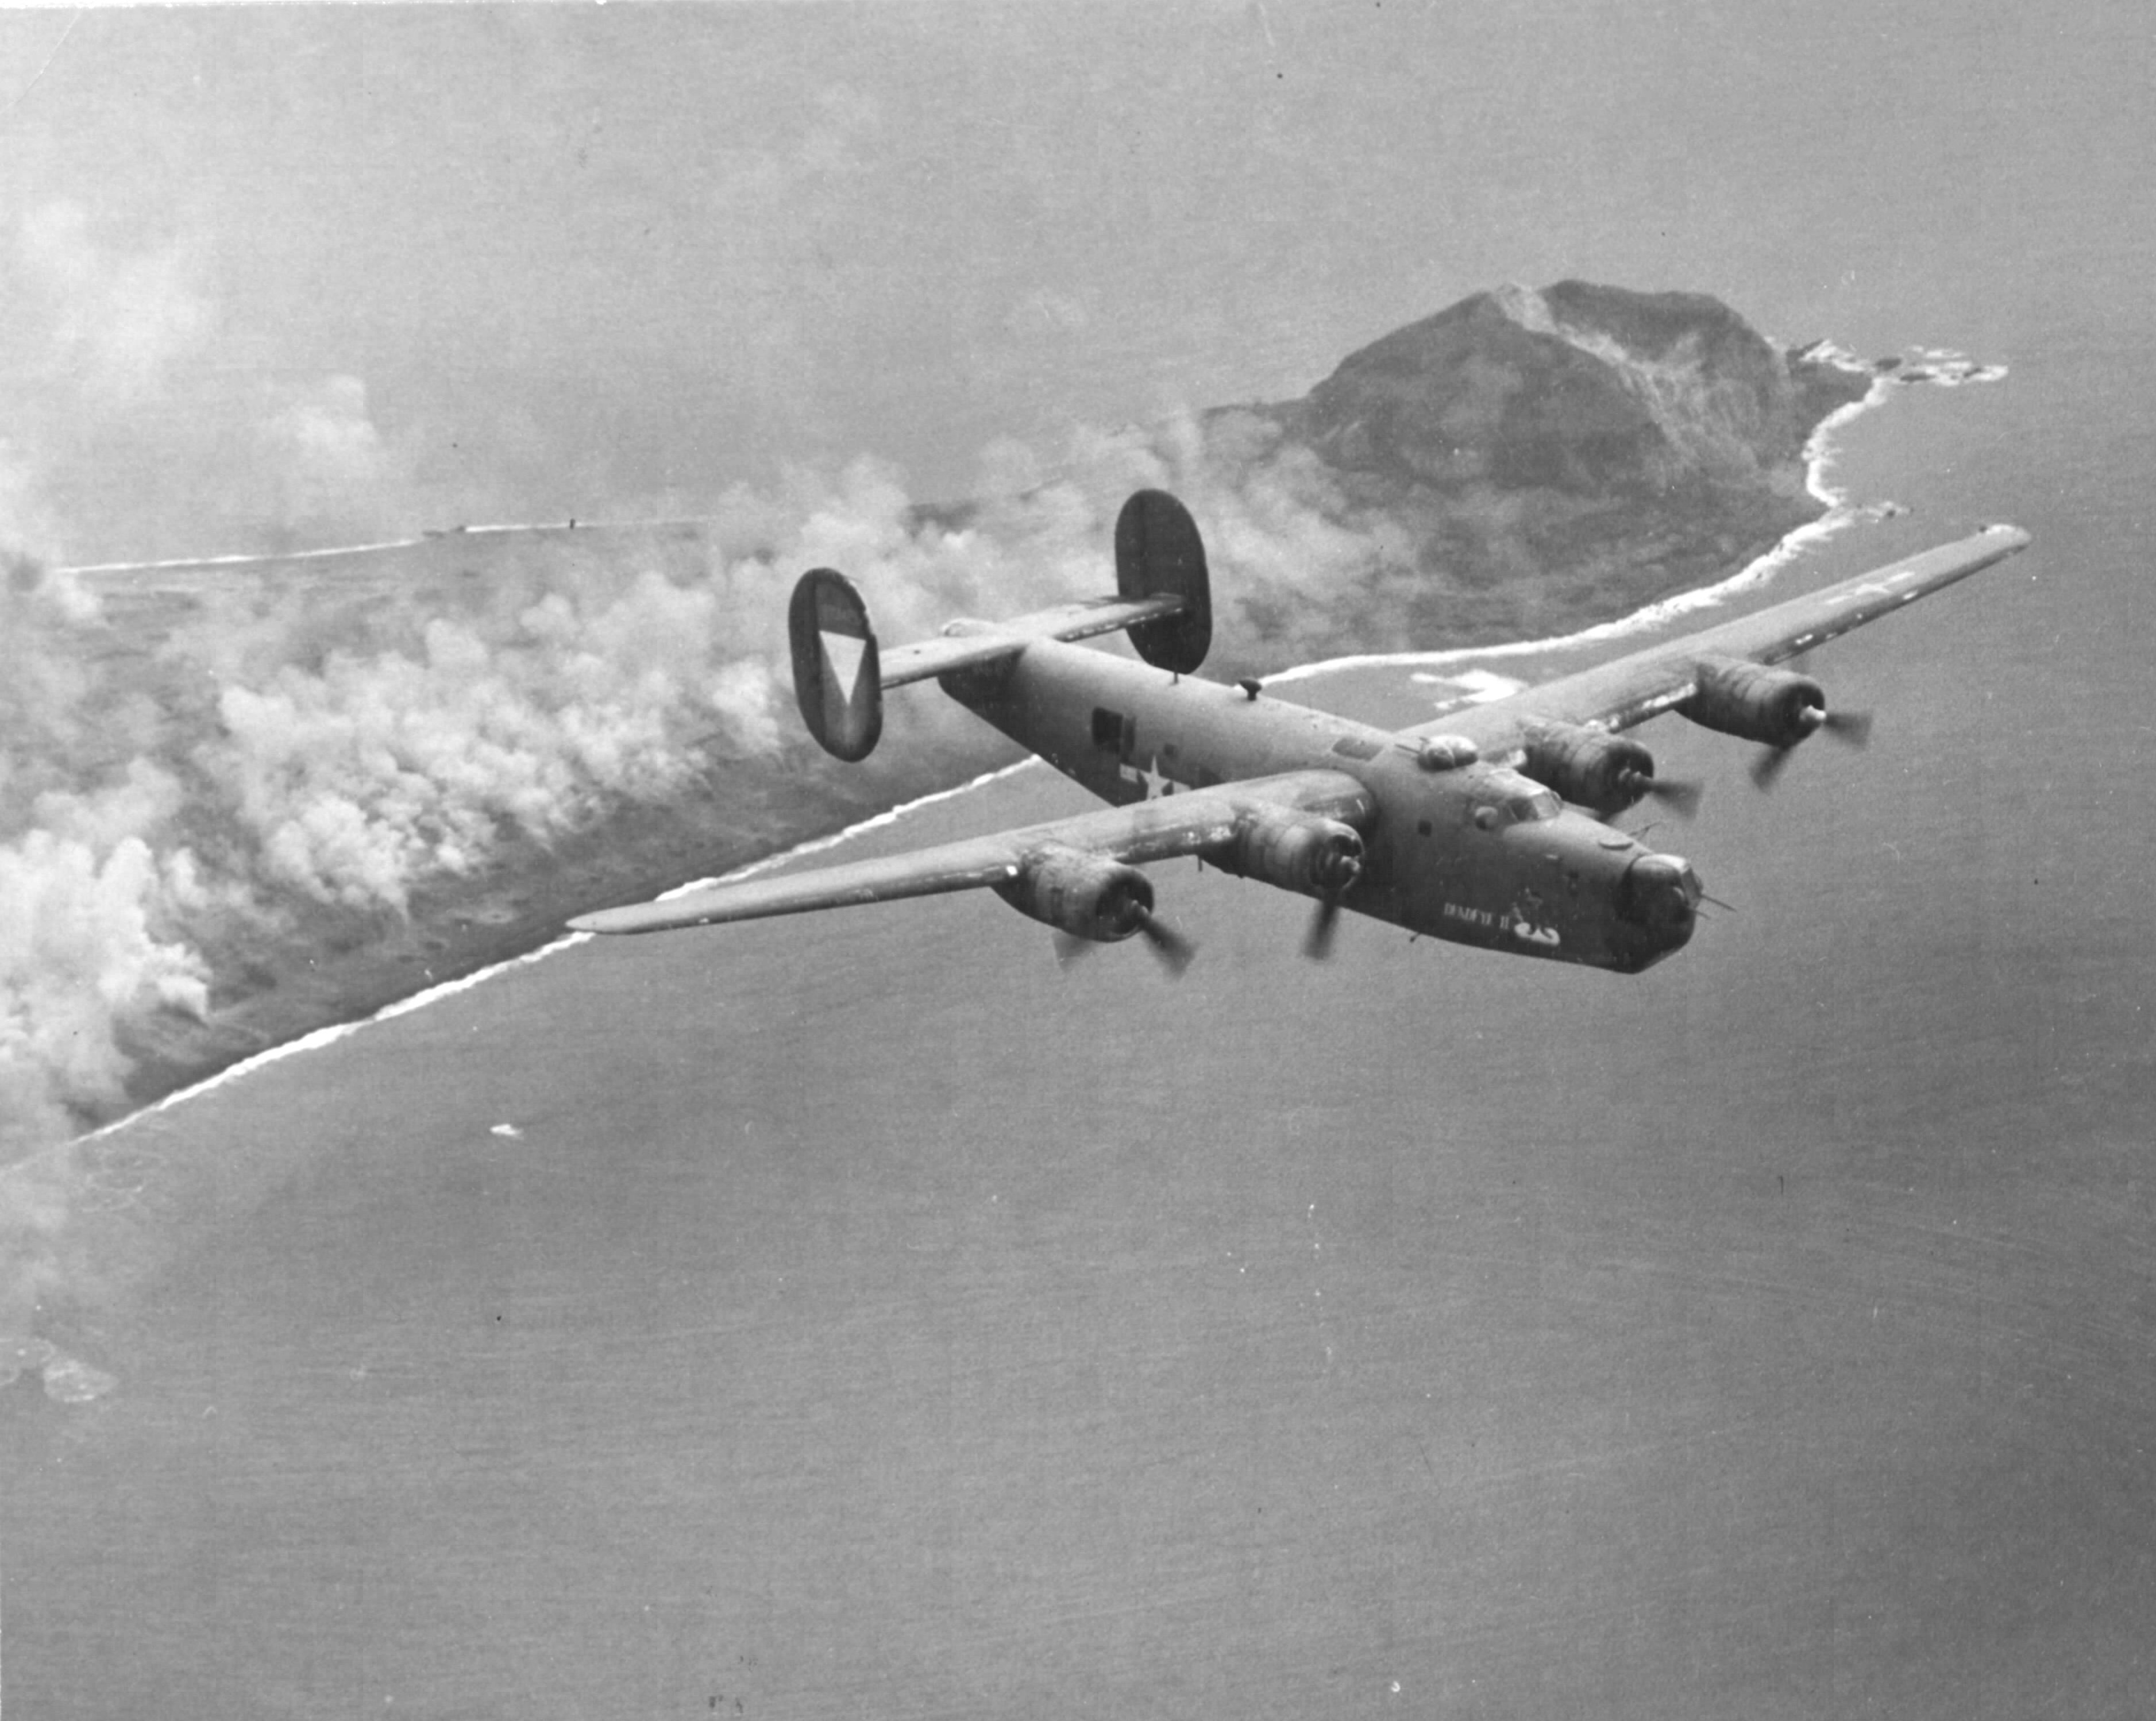 B-24J Liberator “Deadeye II” of the 392nd Bomb Squadron flown by Lt. Warren Myllenbeck flying from Saipan, Mariana Islands, overflying Iwo Jima and Mt Suribachi, 1944-45.